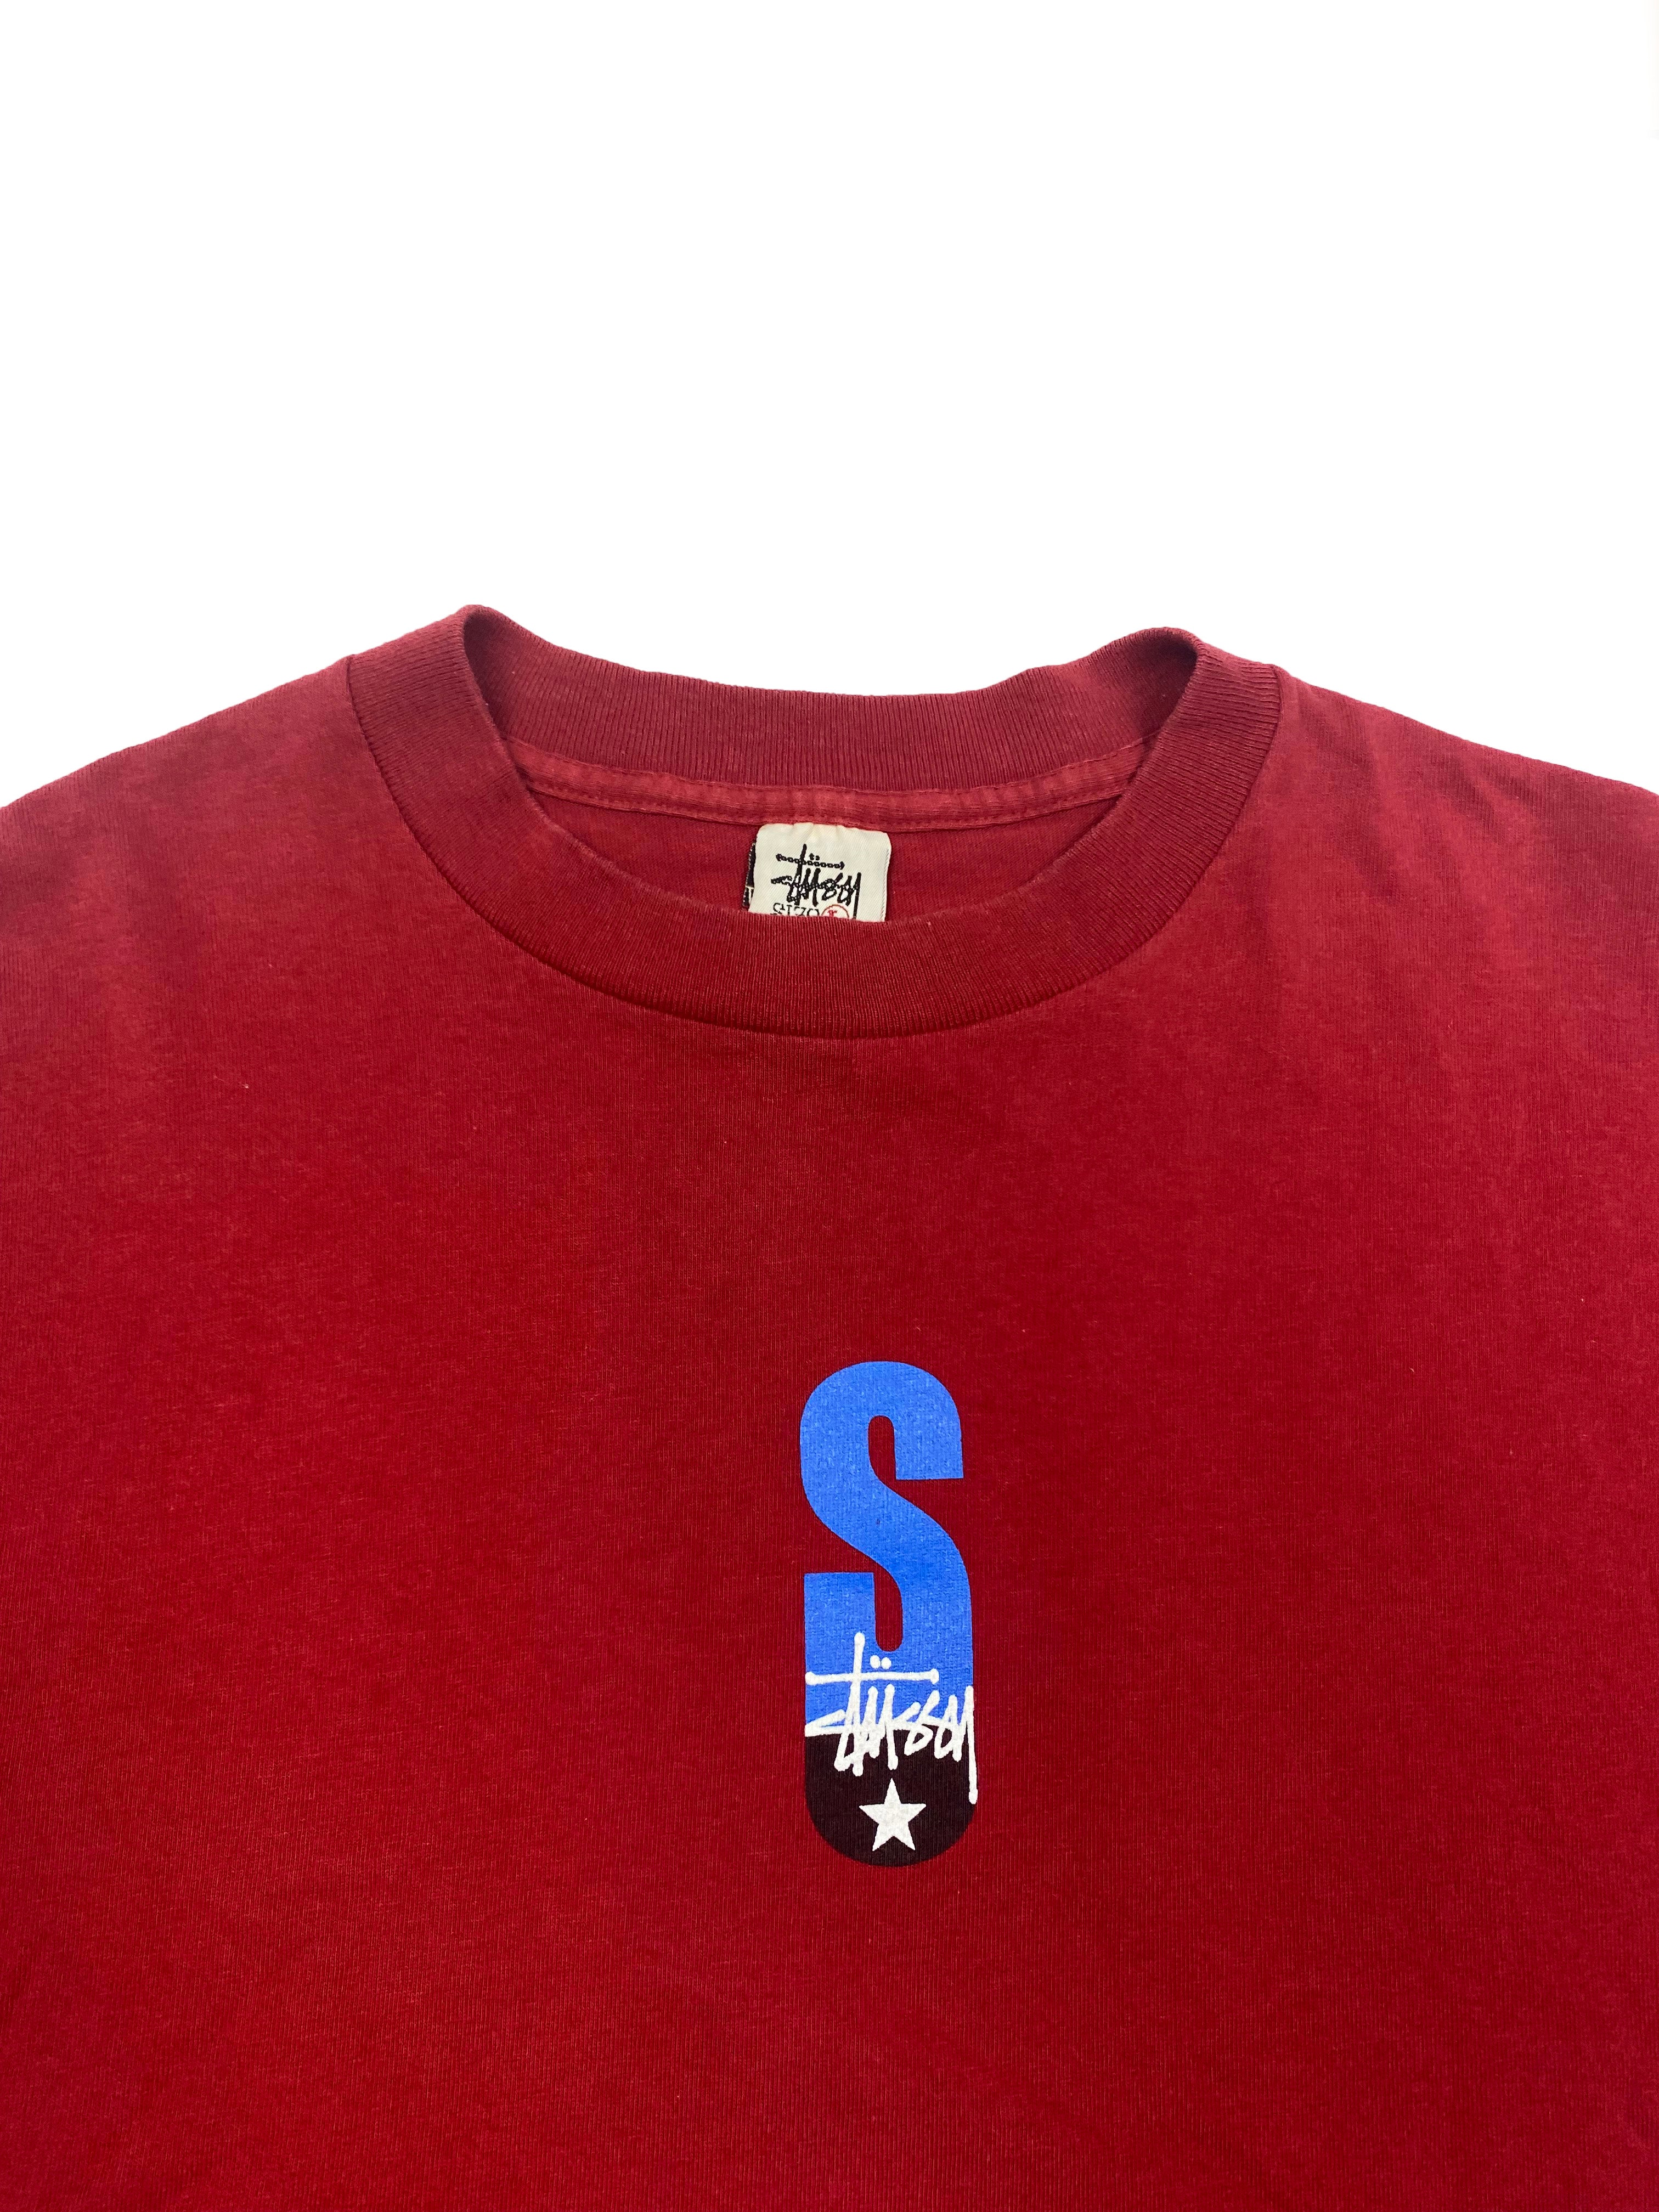 Stussy Burgundy 'S' T-shirt 1994